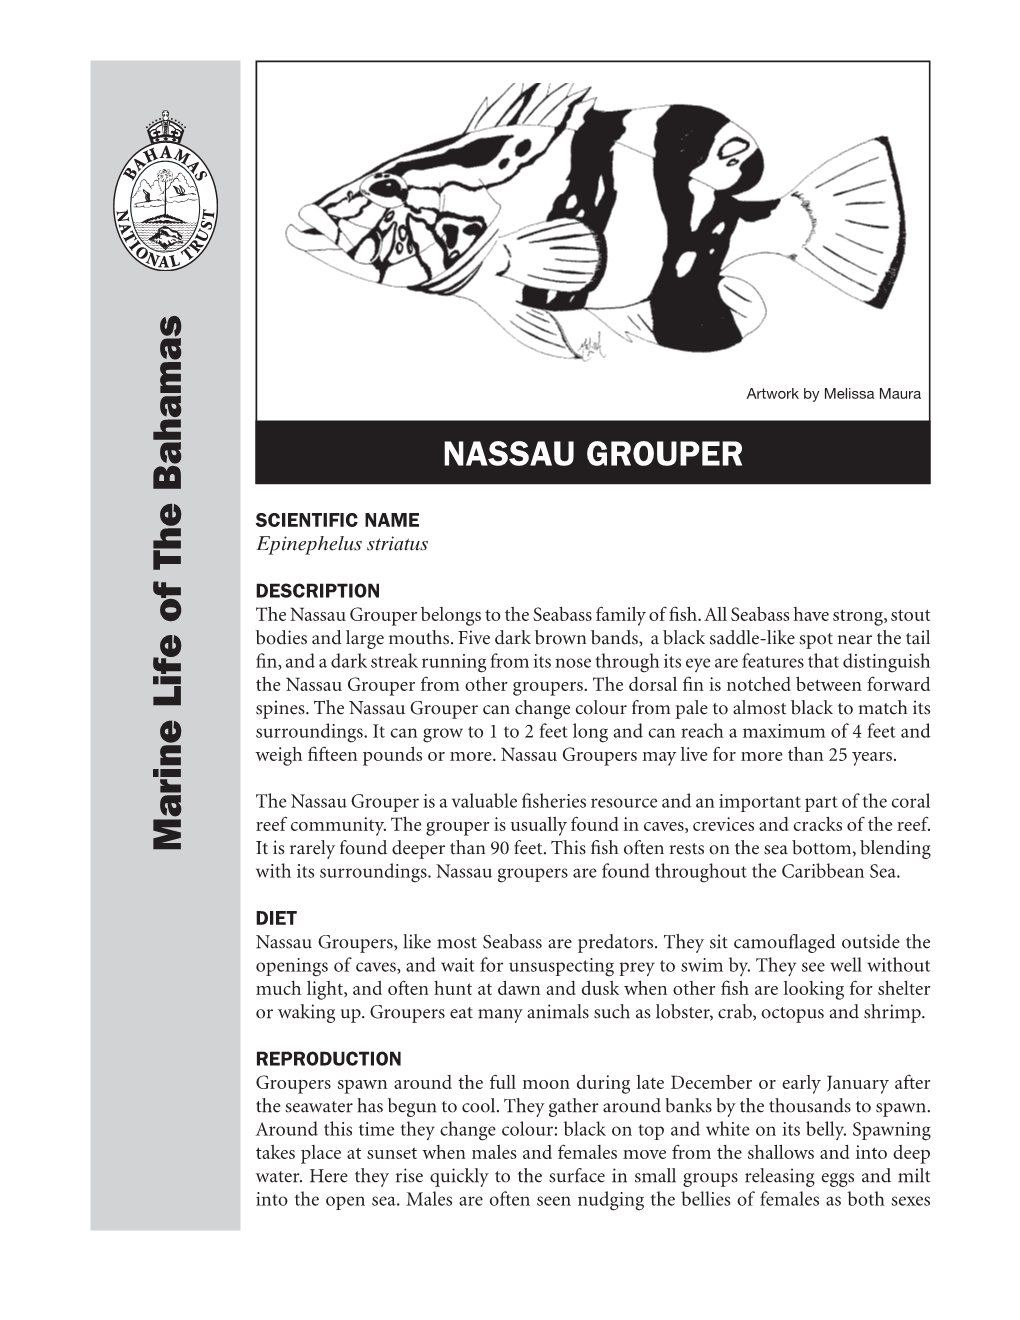 Nassau Groupers, Like Mostseabass Are Predators